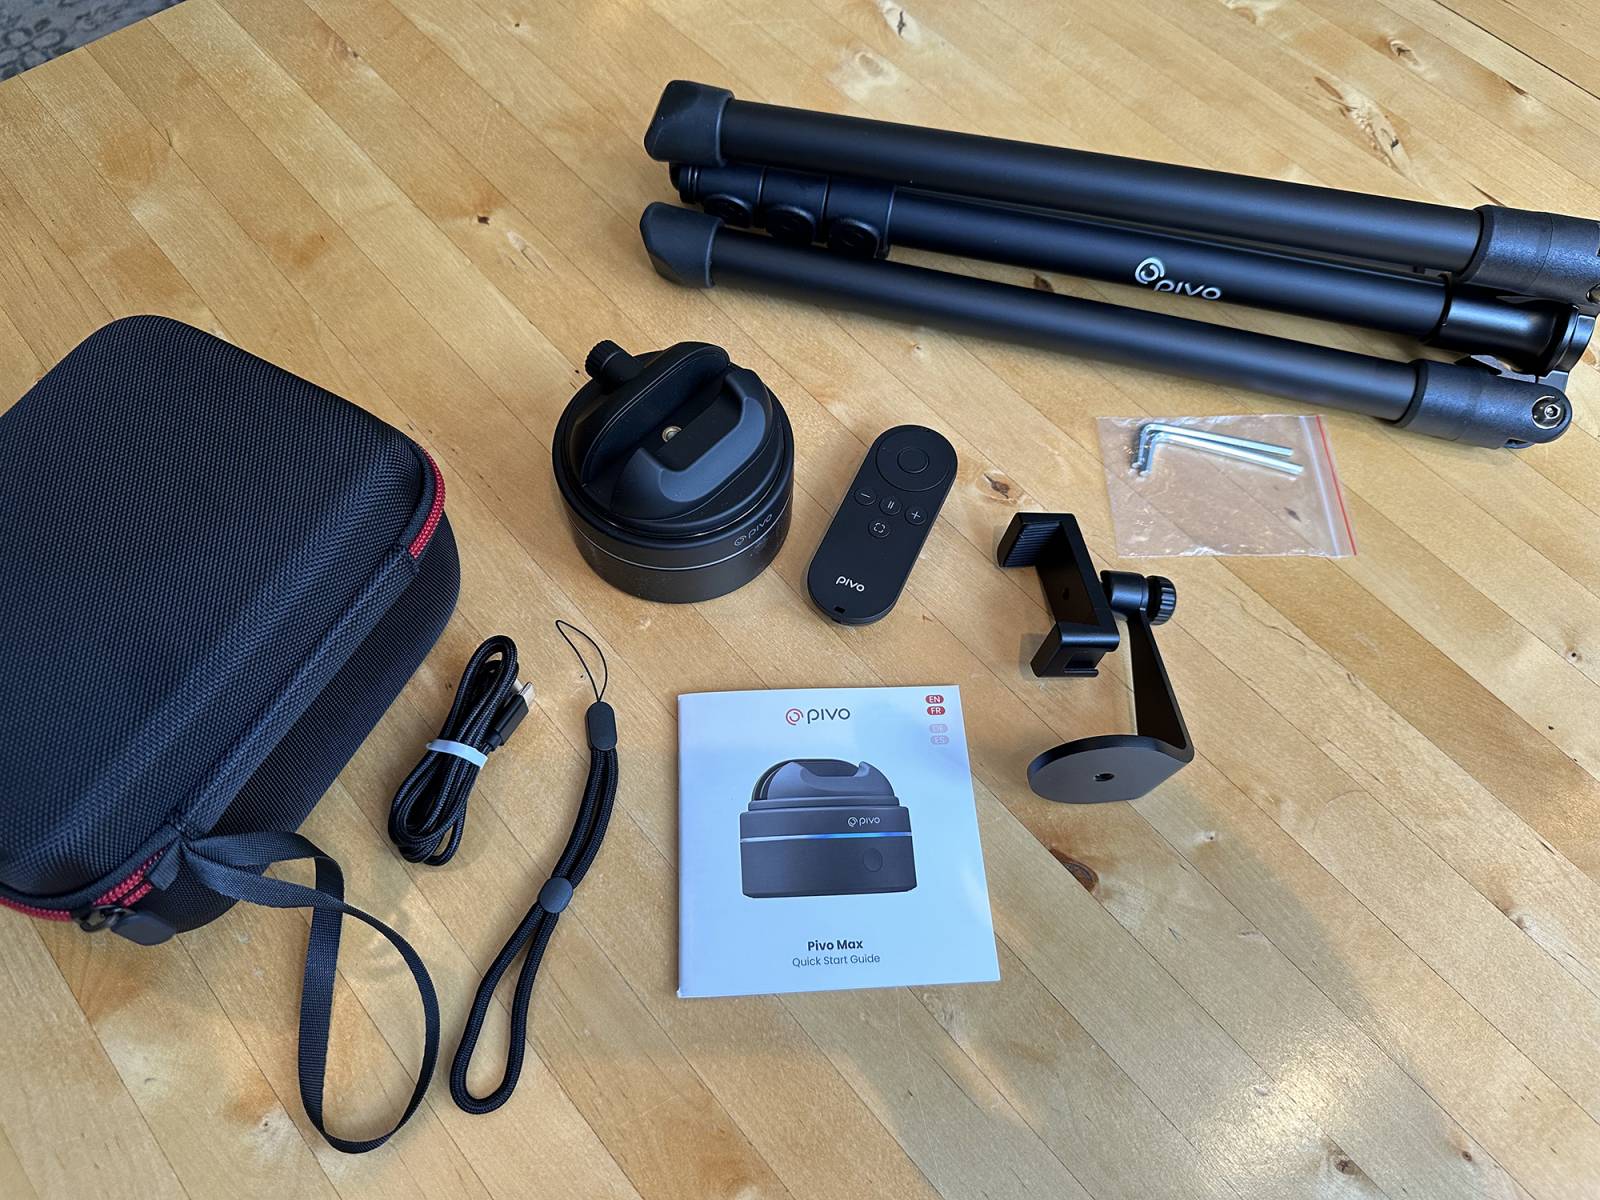 Pivo Max + Essential Kit accessories unboxed